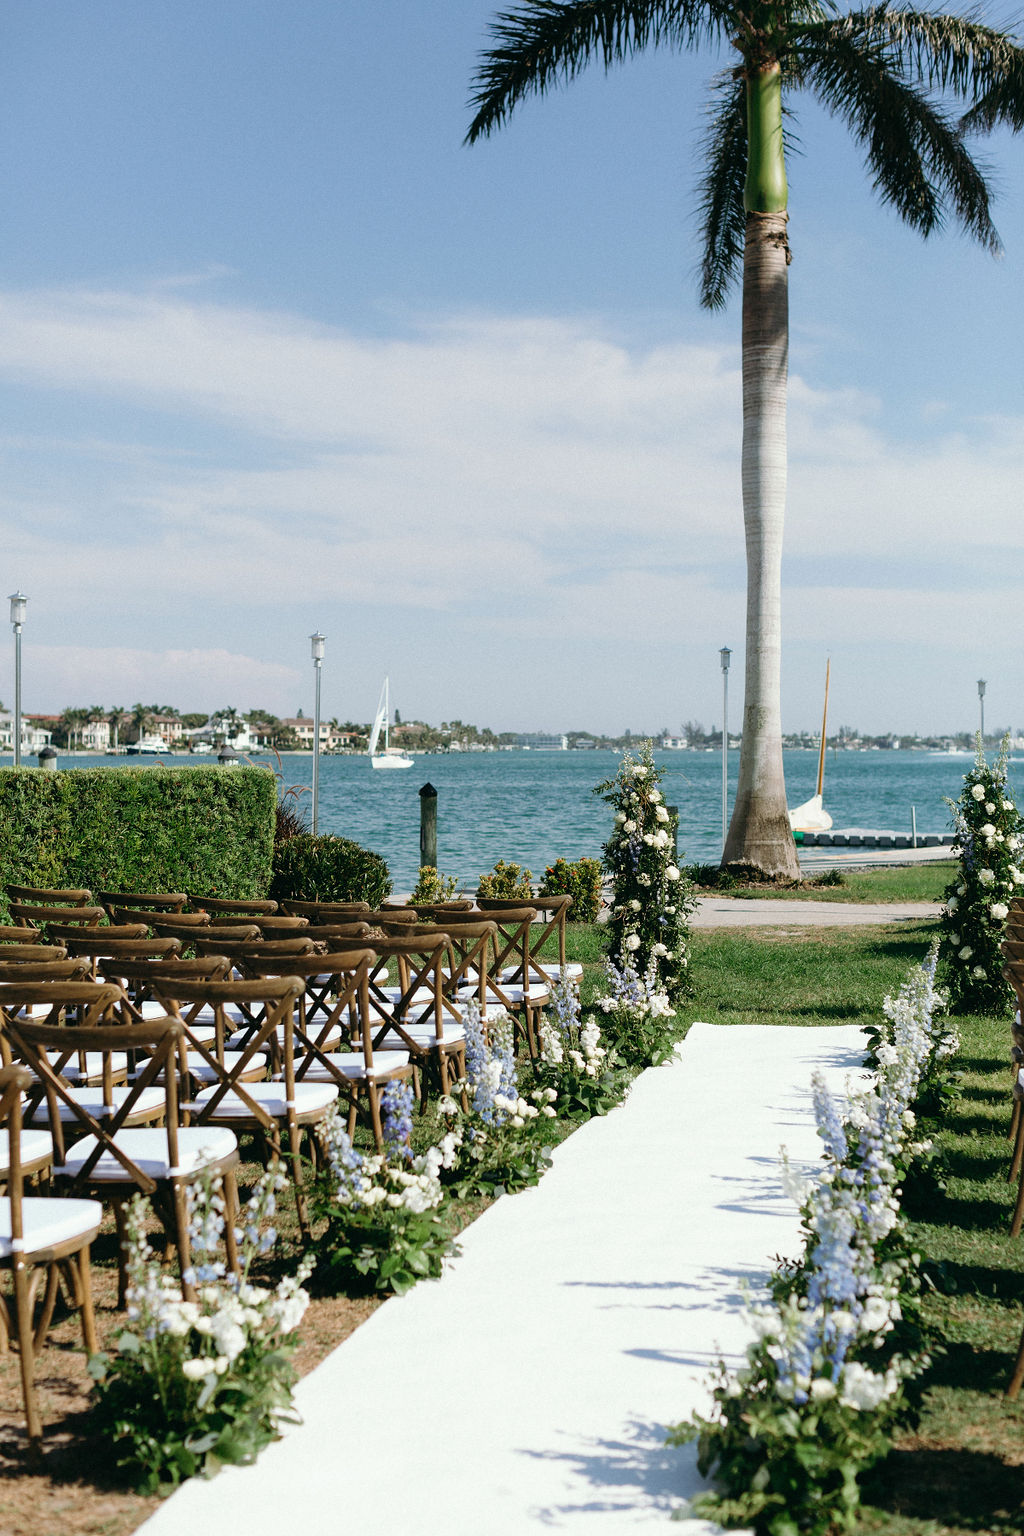 Wedding Planner & Event Coordination - Sarasota - Tampa - Miami